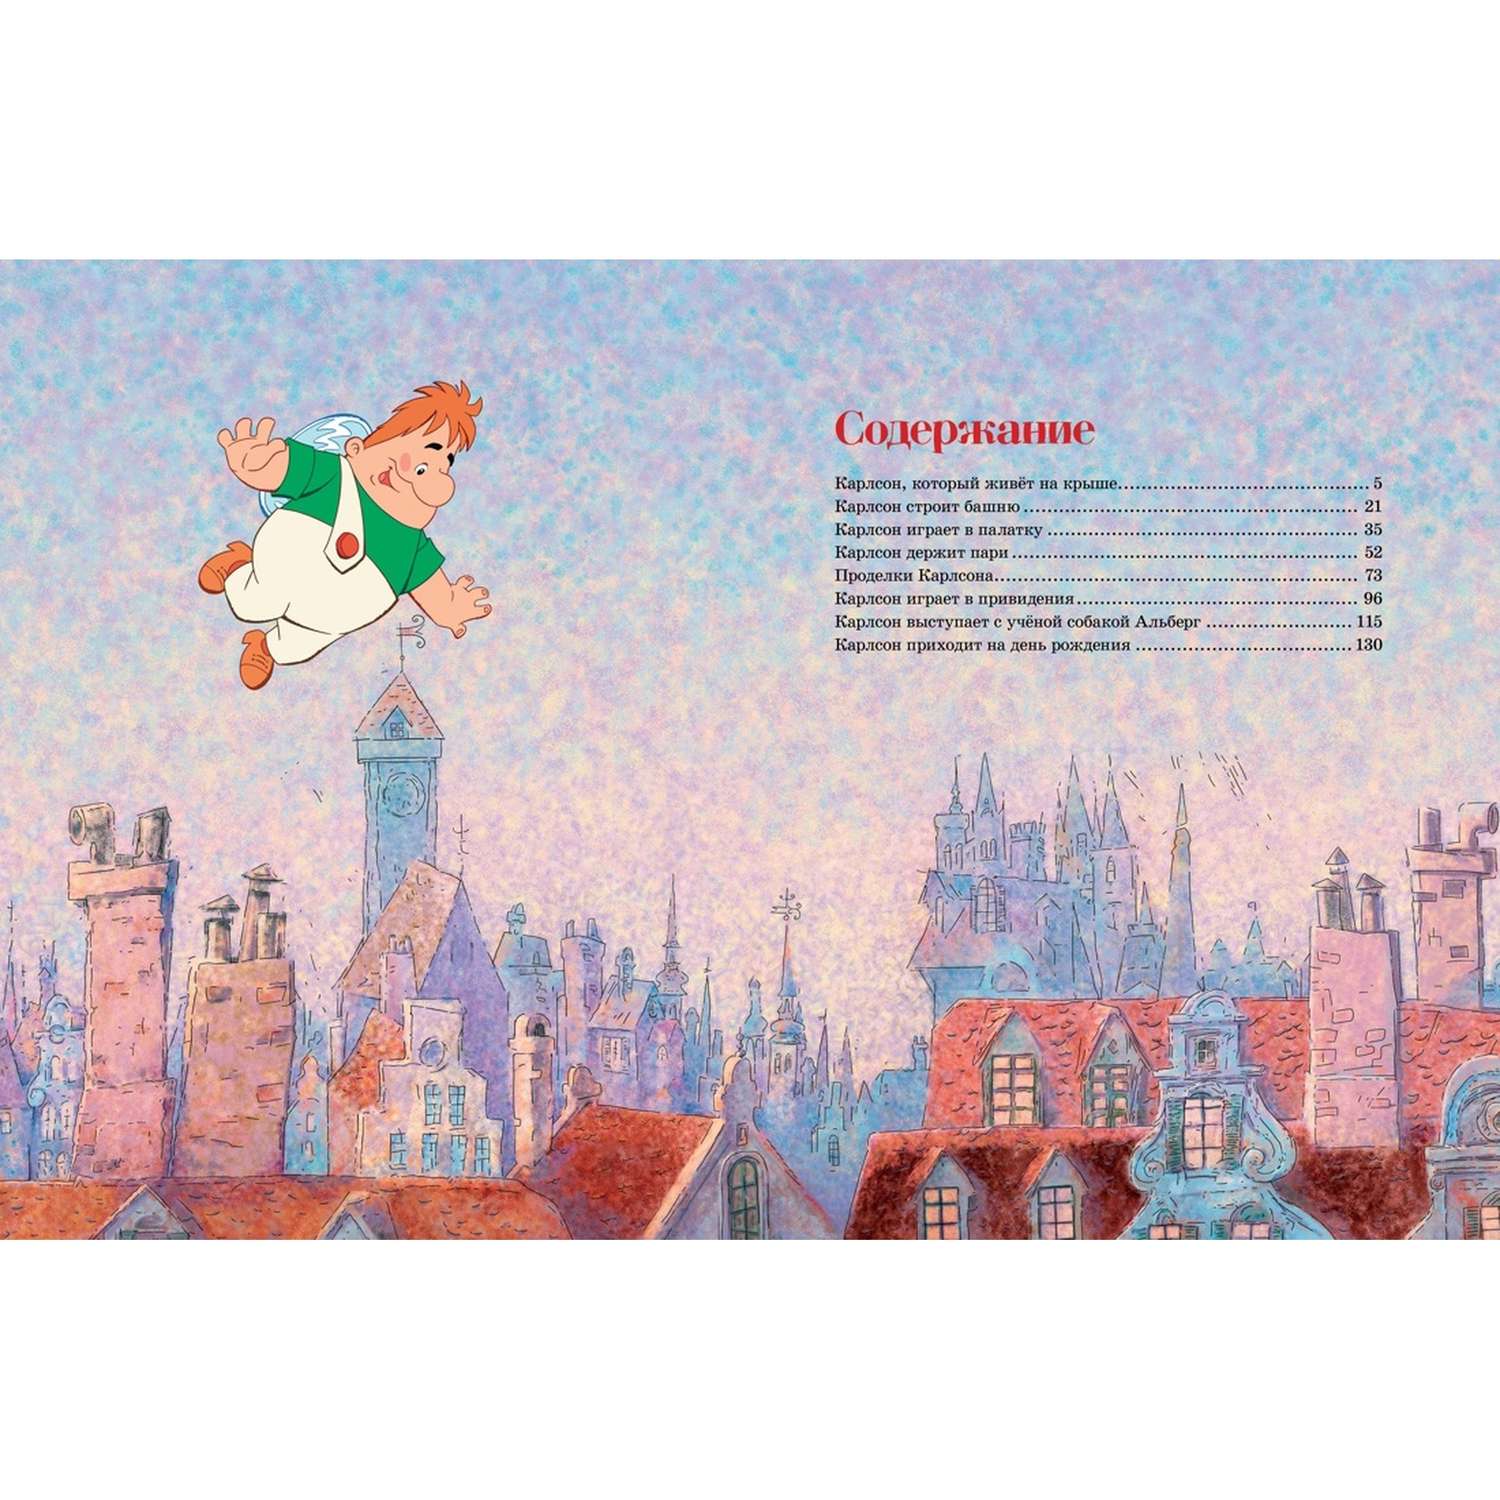 Книга Малыш и Карлсон который живёт на крыше Линдгрен иллюстрации Савченко - фото 11